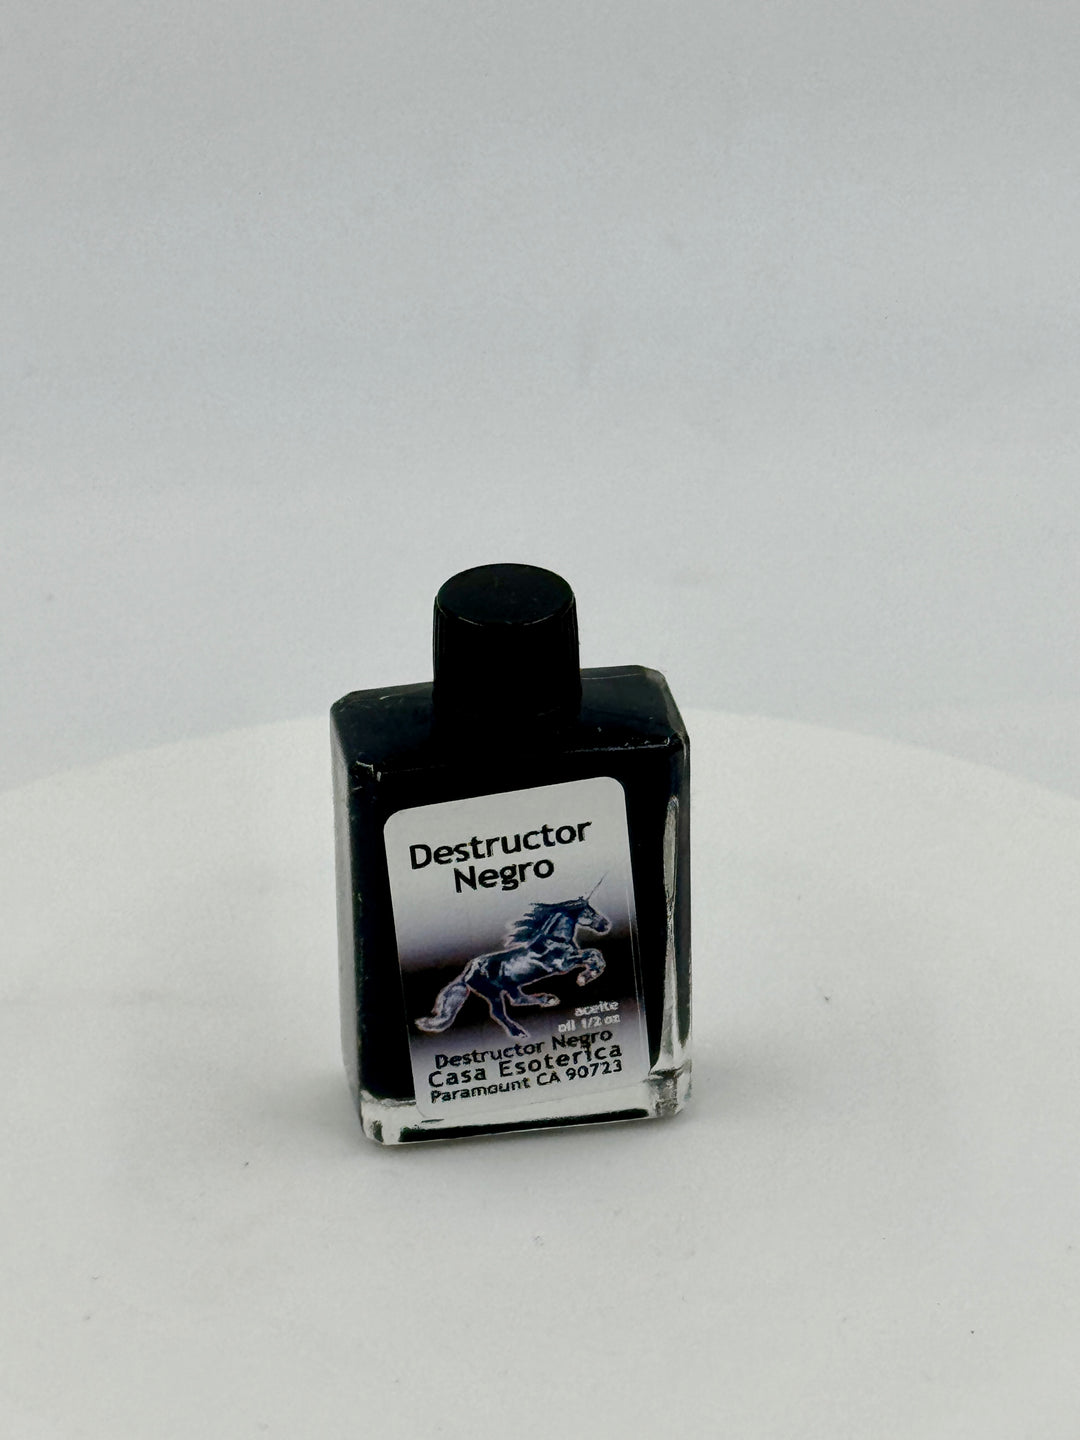 BLACK DESTROYER (DESTRUCTOR NEGRO) -Oil/Aceite